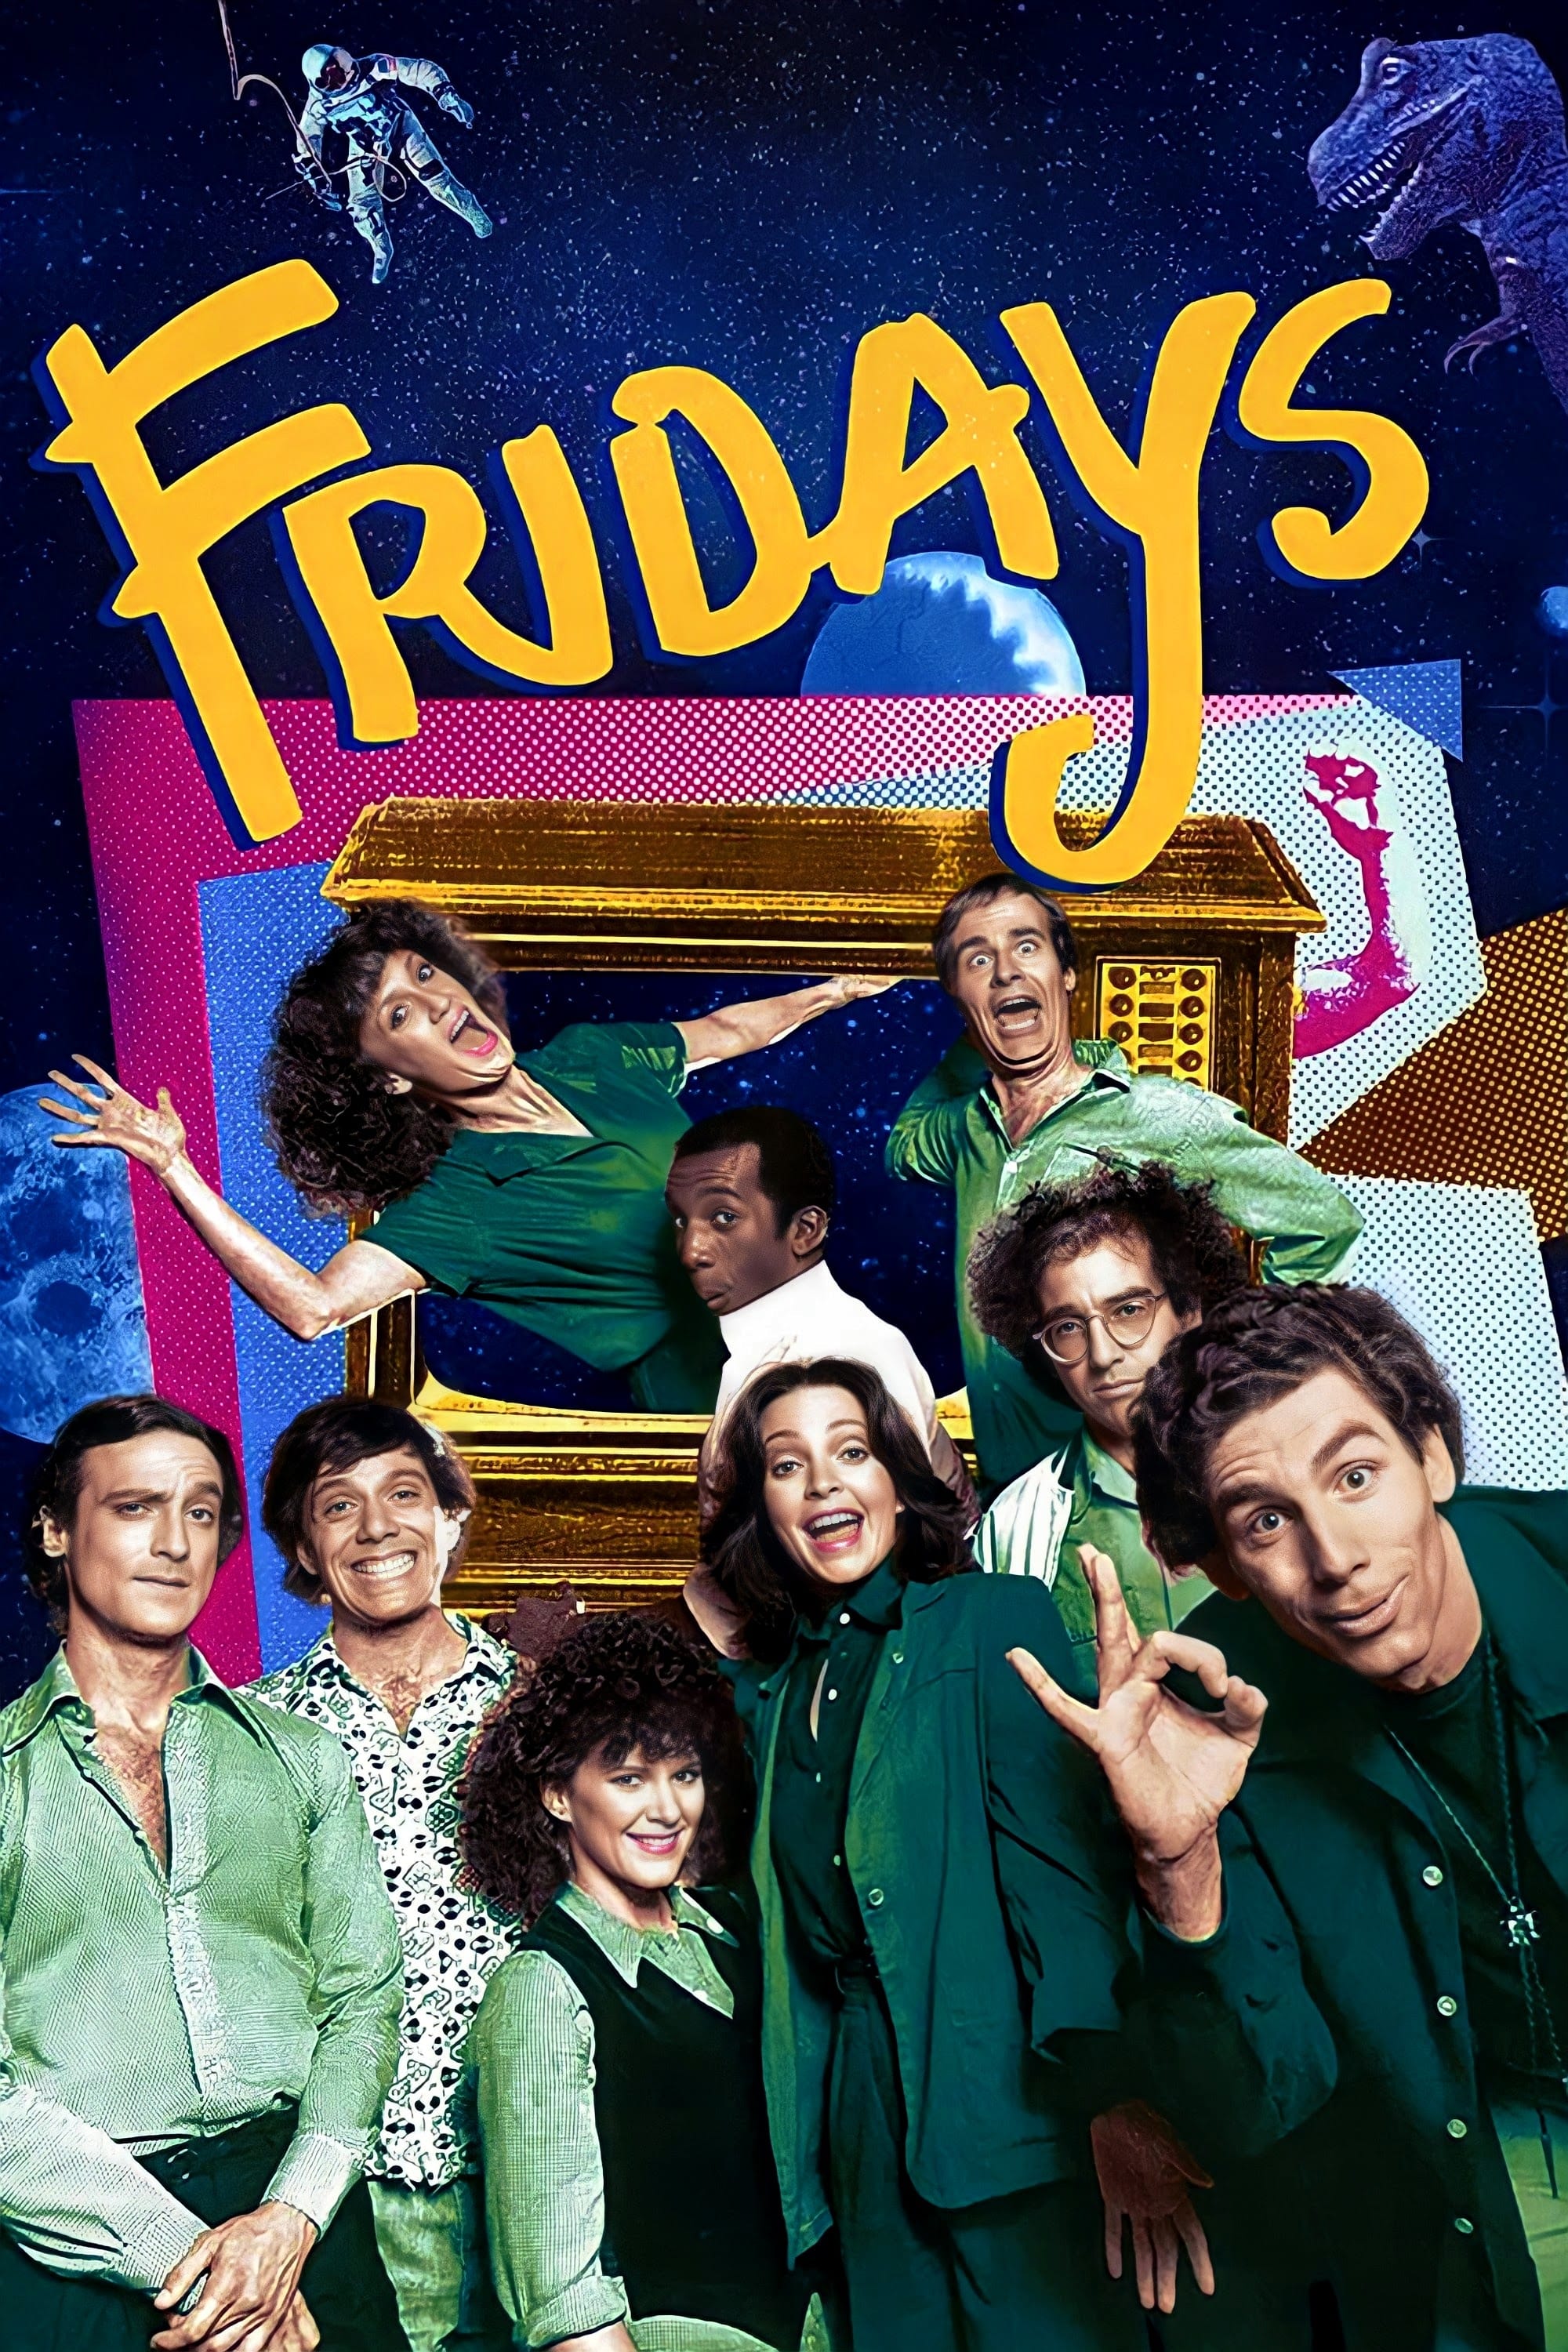 Fridays (1980)